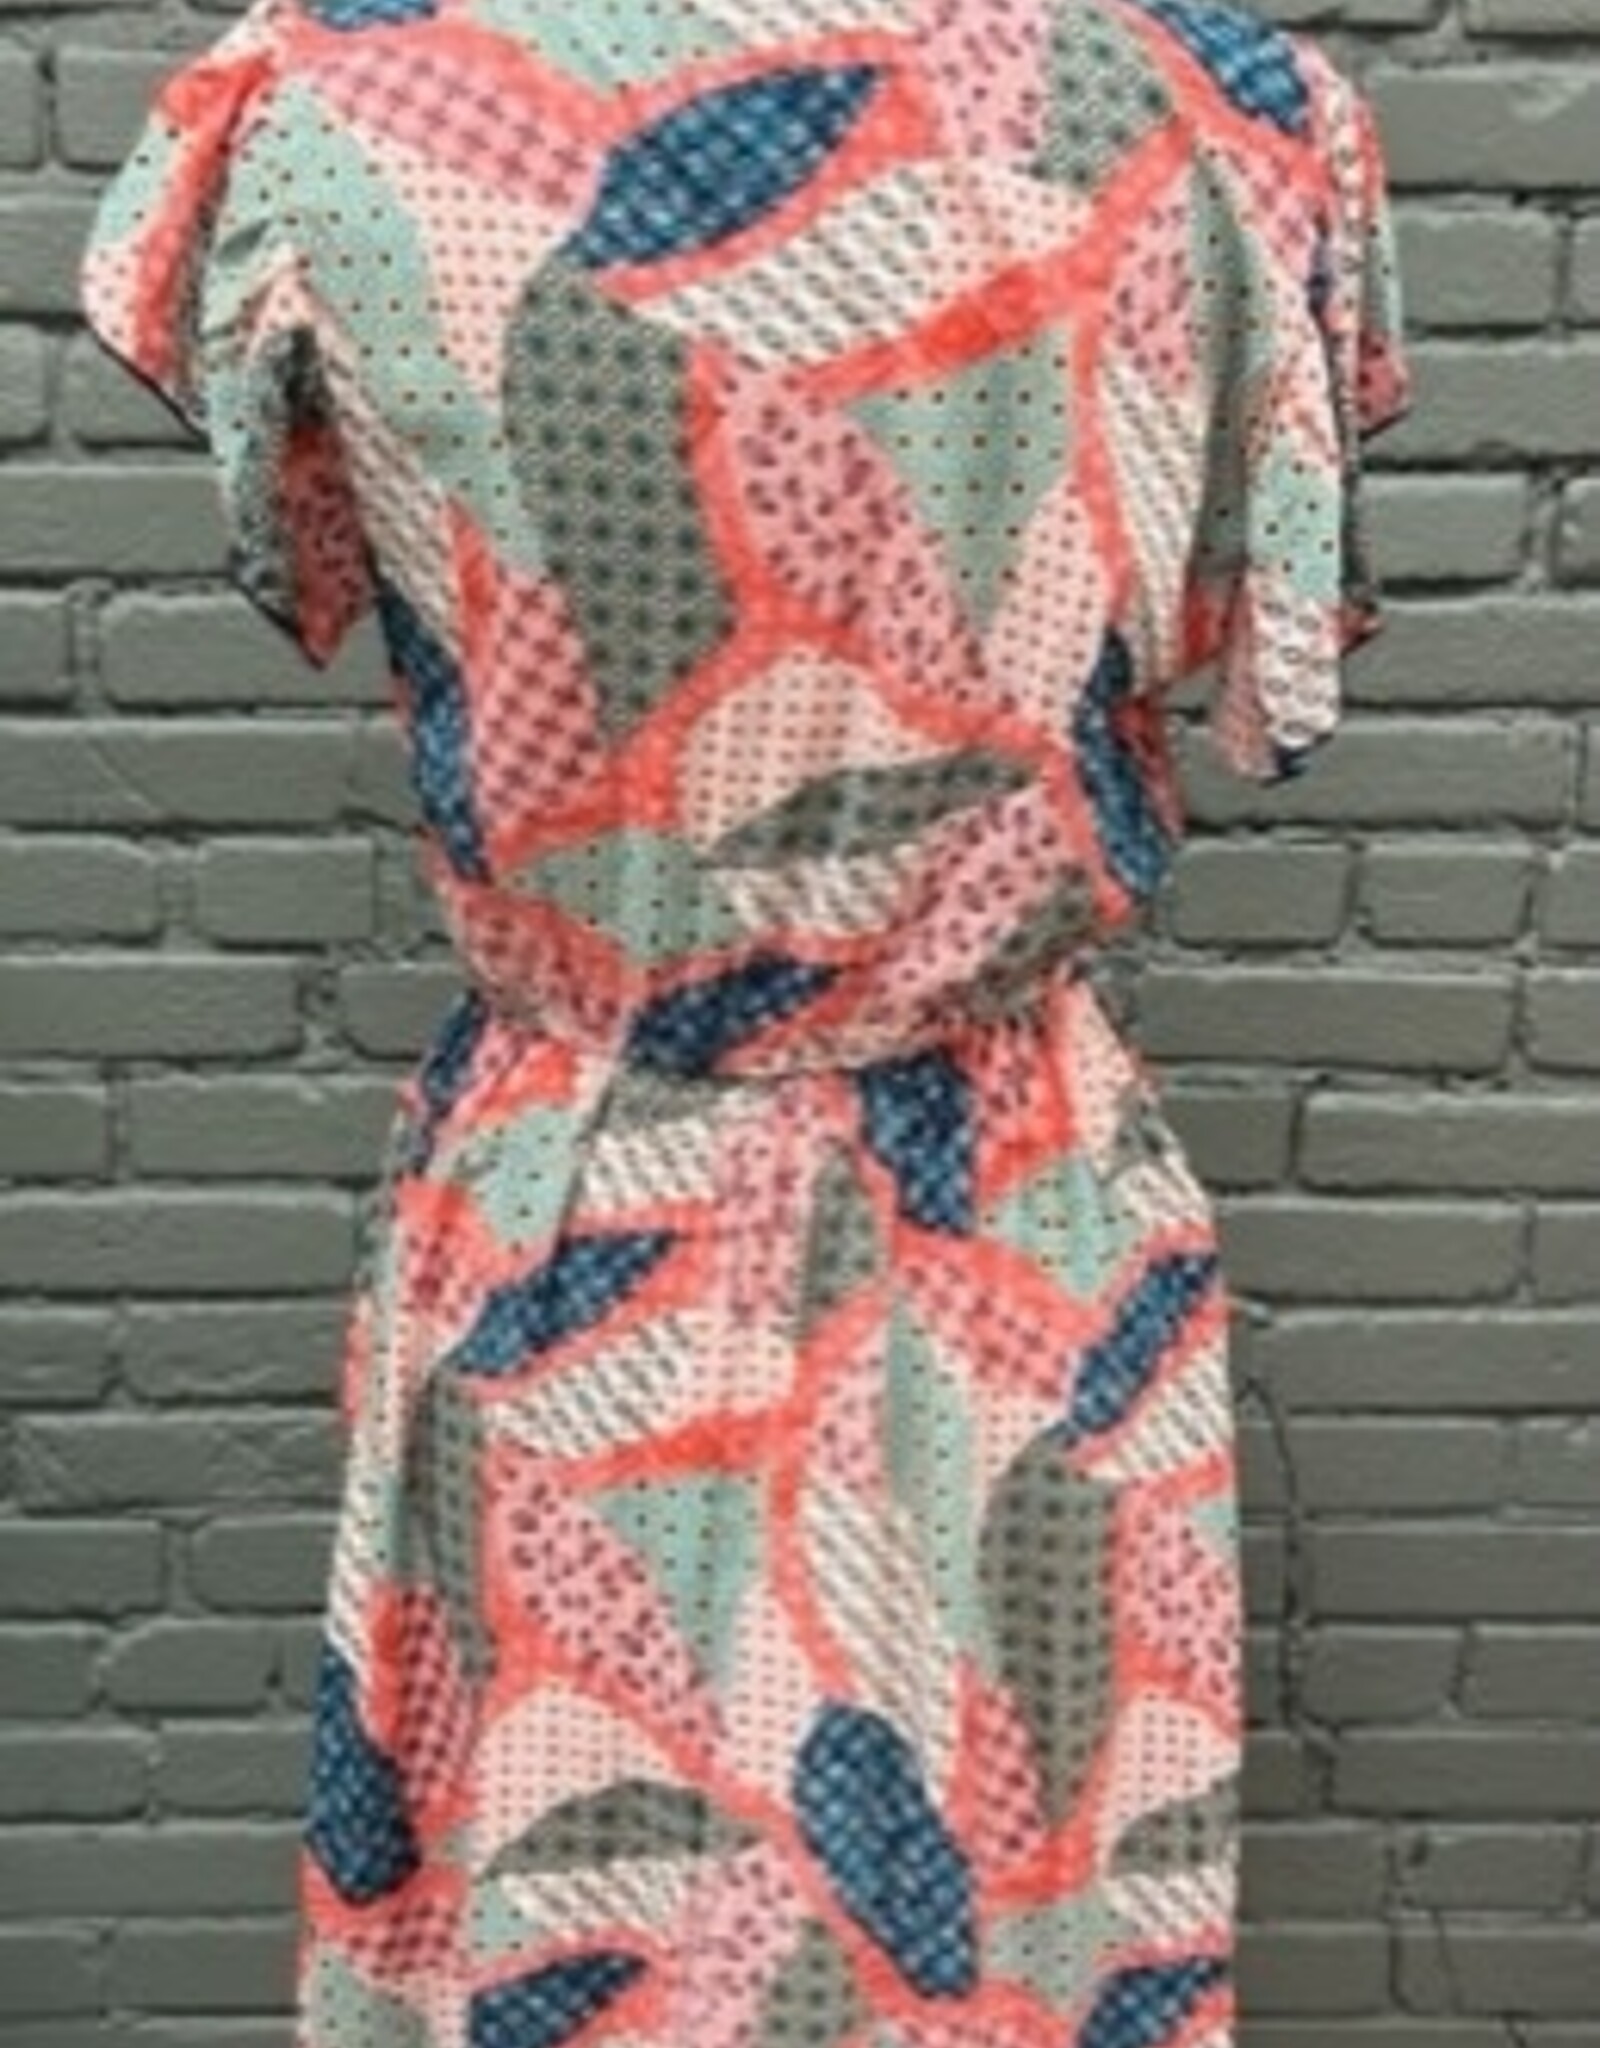 Dress Maya Printed Ruffle Midi Dress